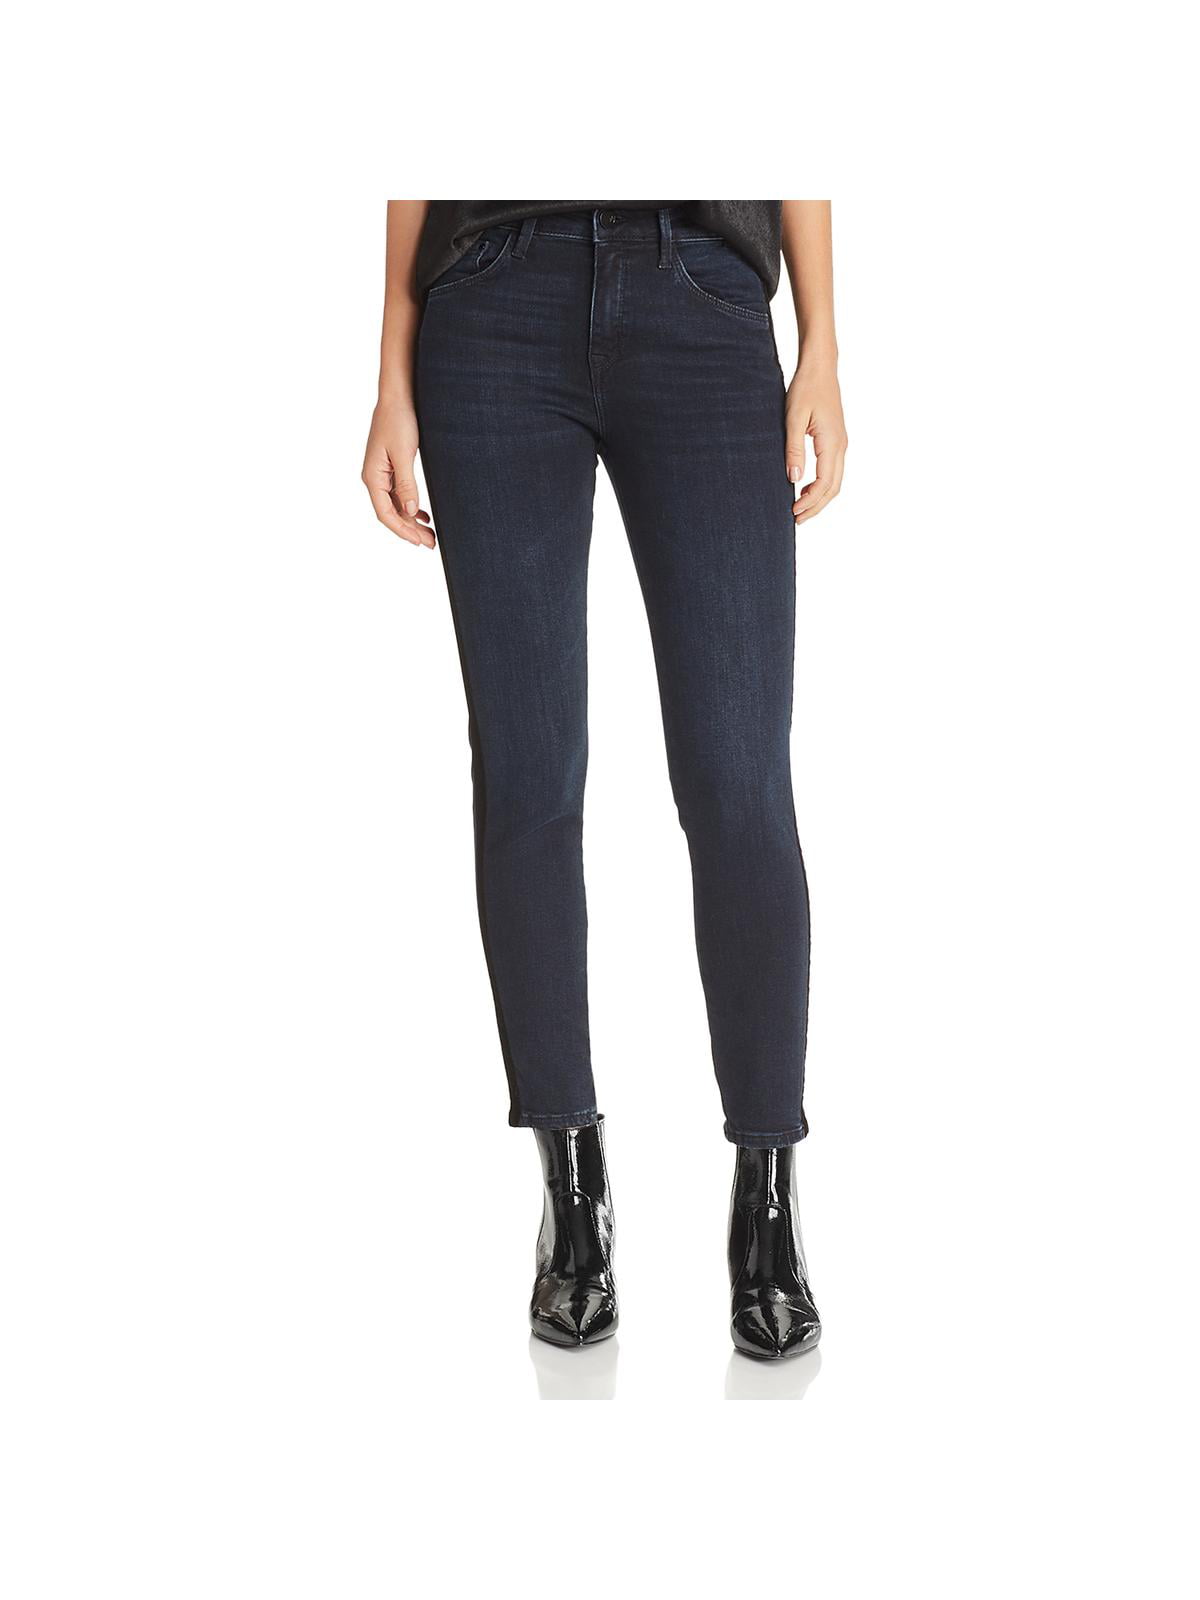 Mavi Gold - Mavi Gold Womens Denim Striped Skinny Jeans - Walmart.com ...